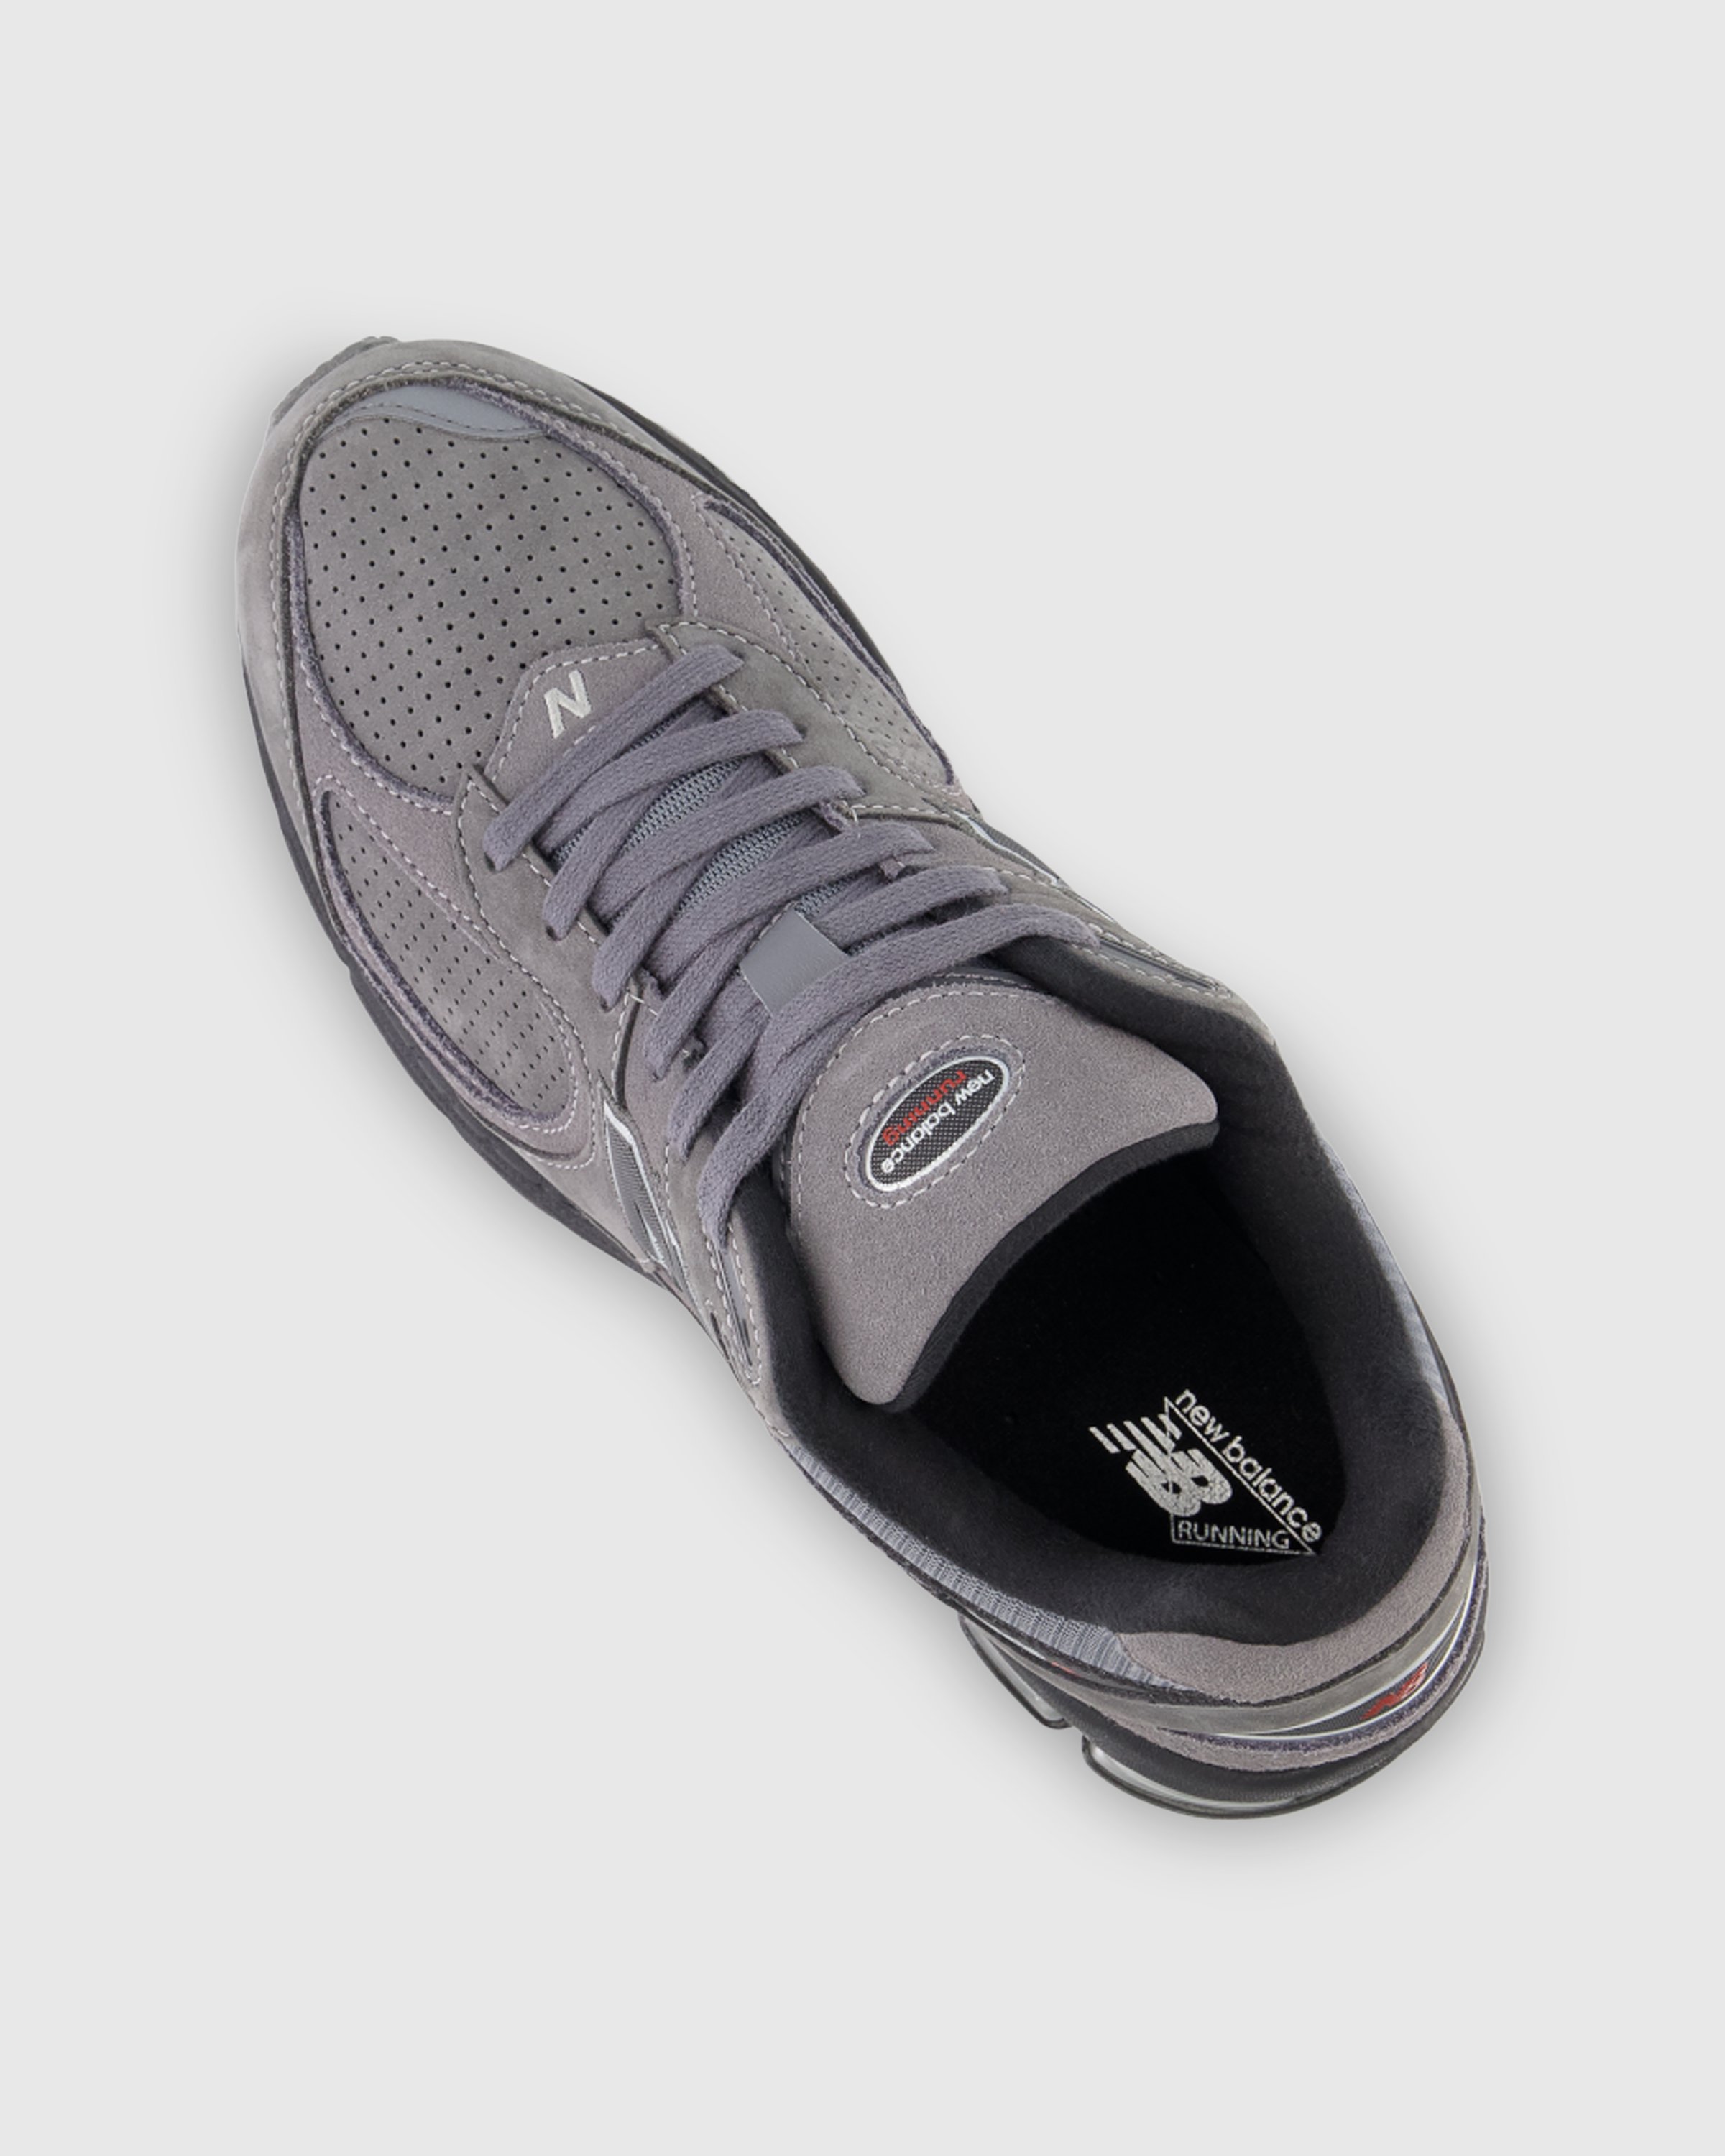 New Balance - M2002REH Castlerock - Footwear - Grey - Image 5